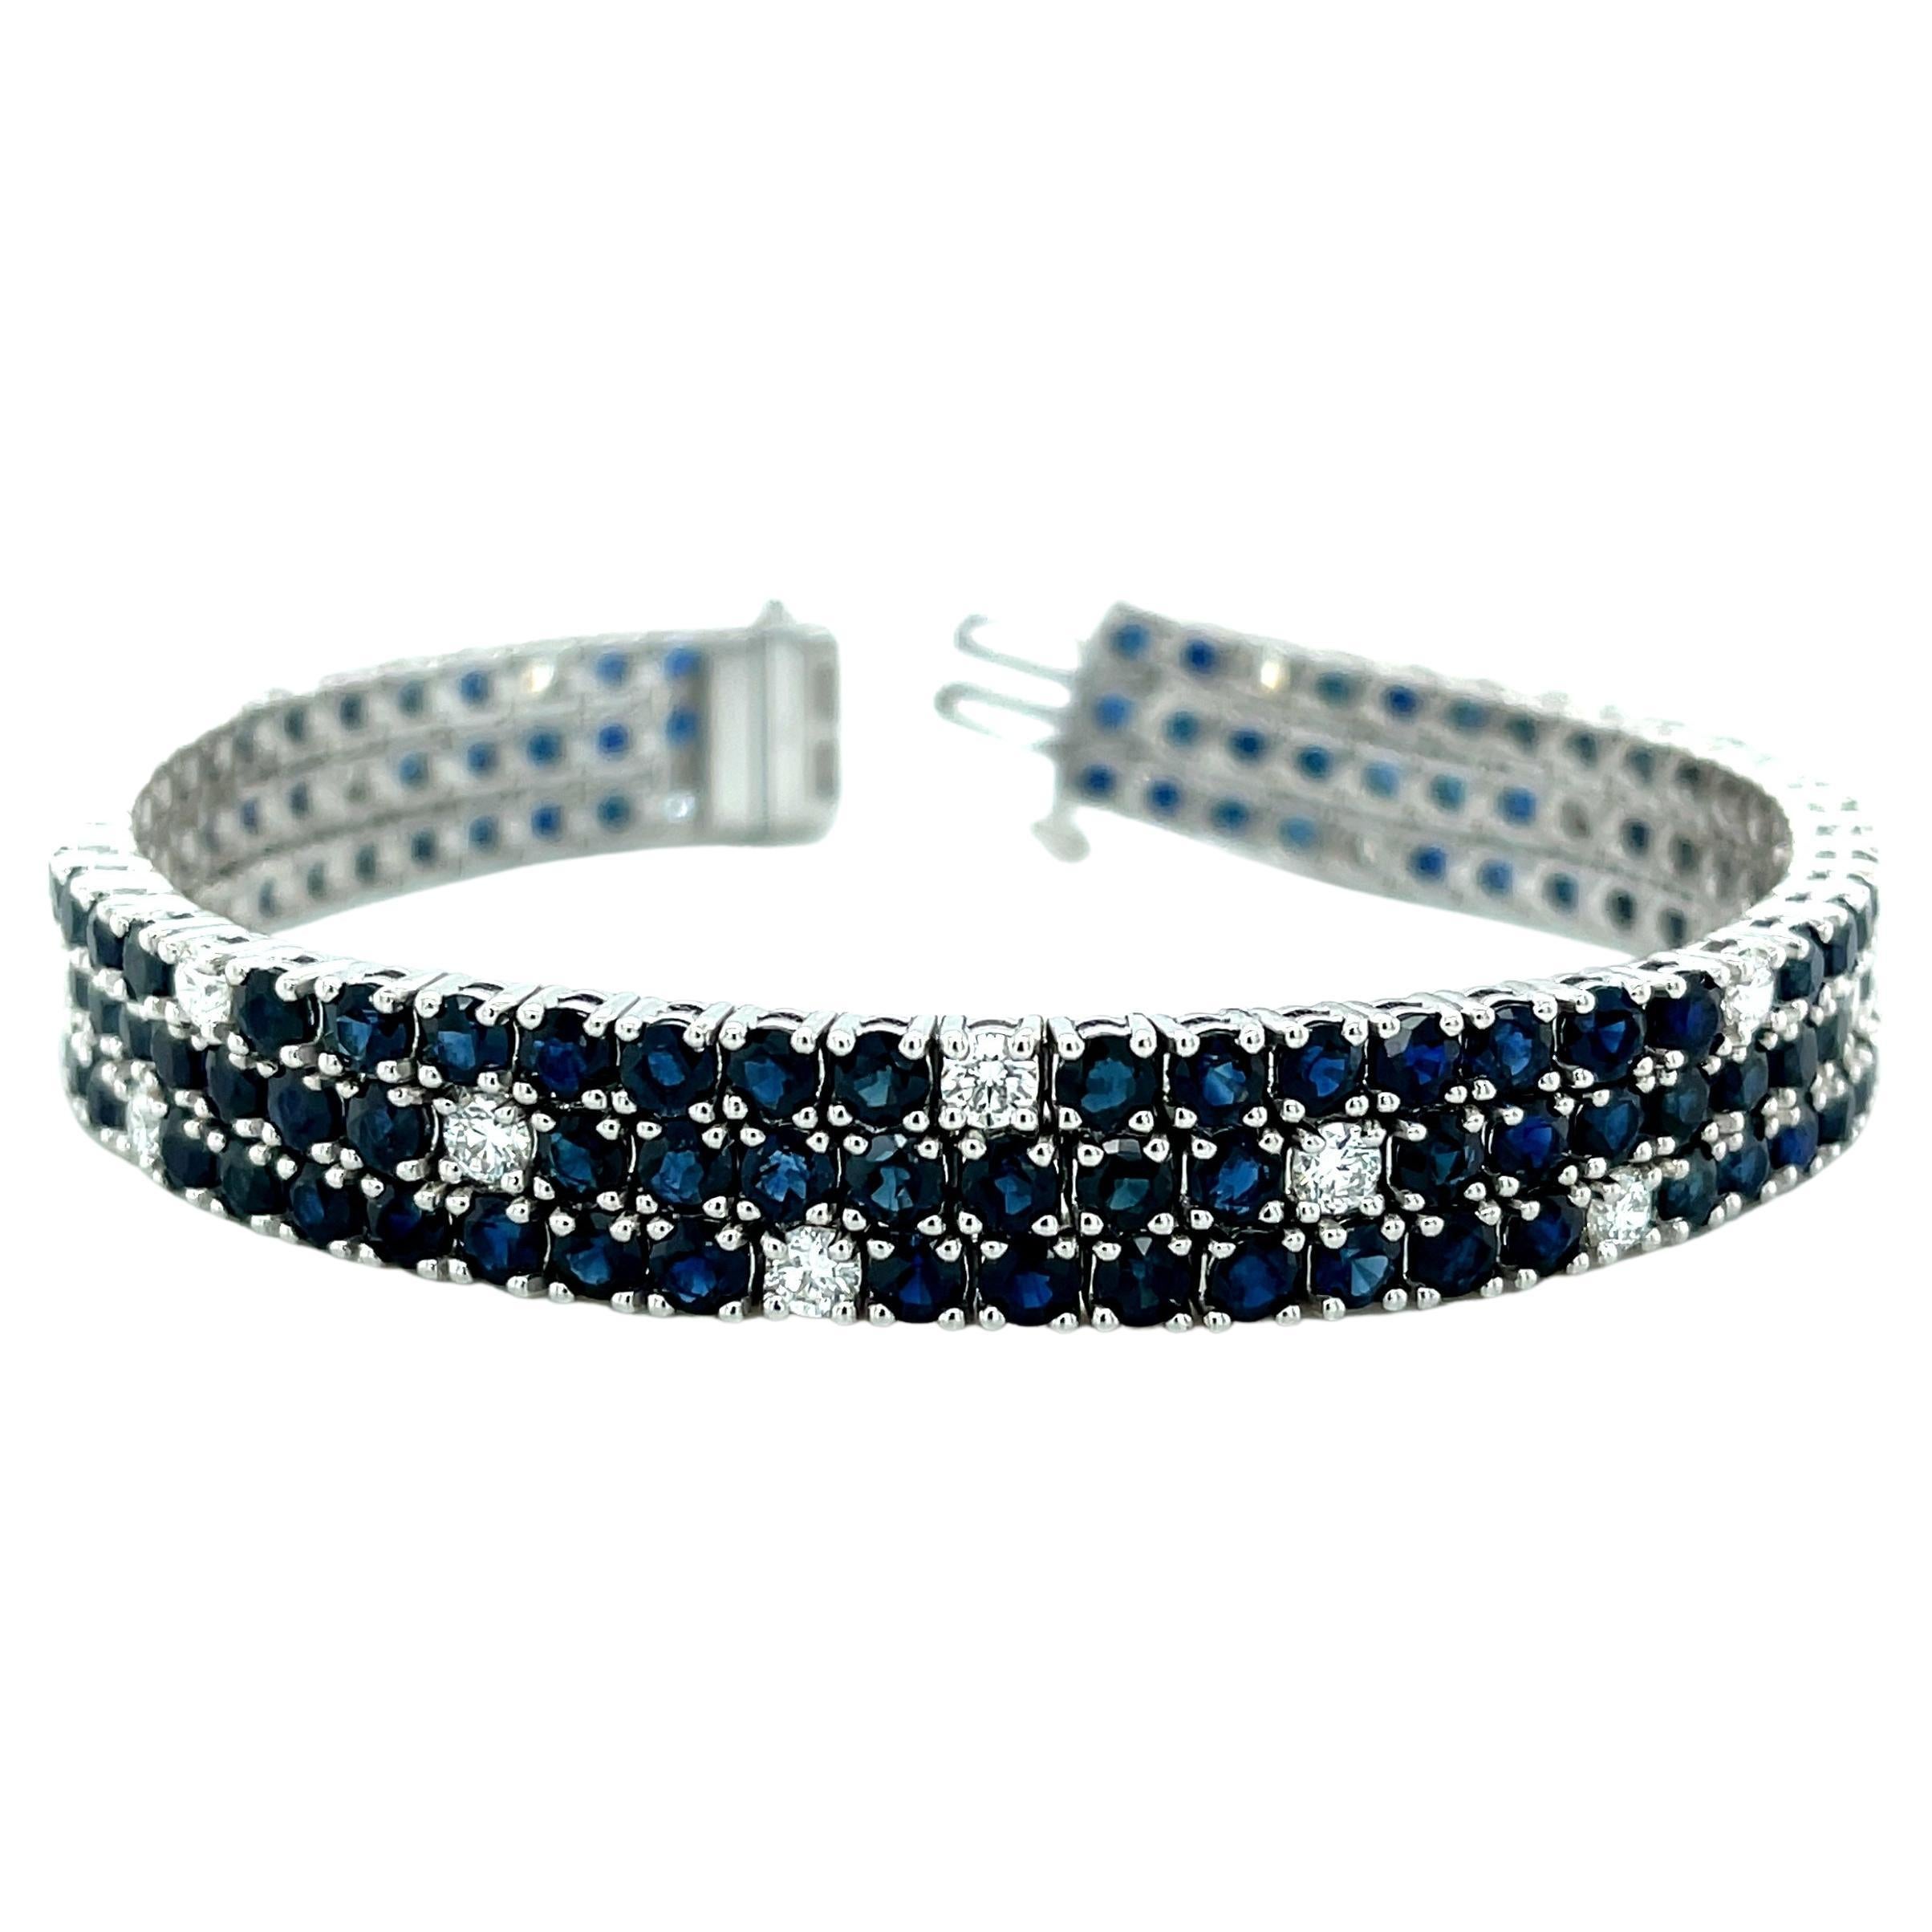 Sapphire, Diamond Art Deco Inspired White Gold Tennis Bracelet 20 Carats Total